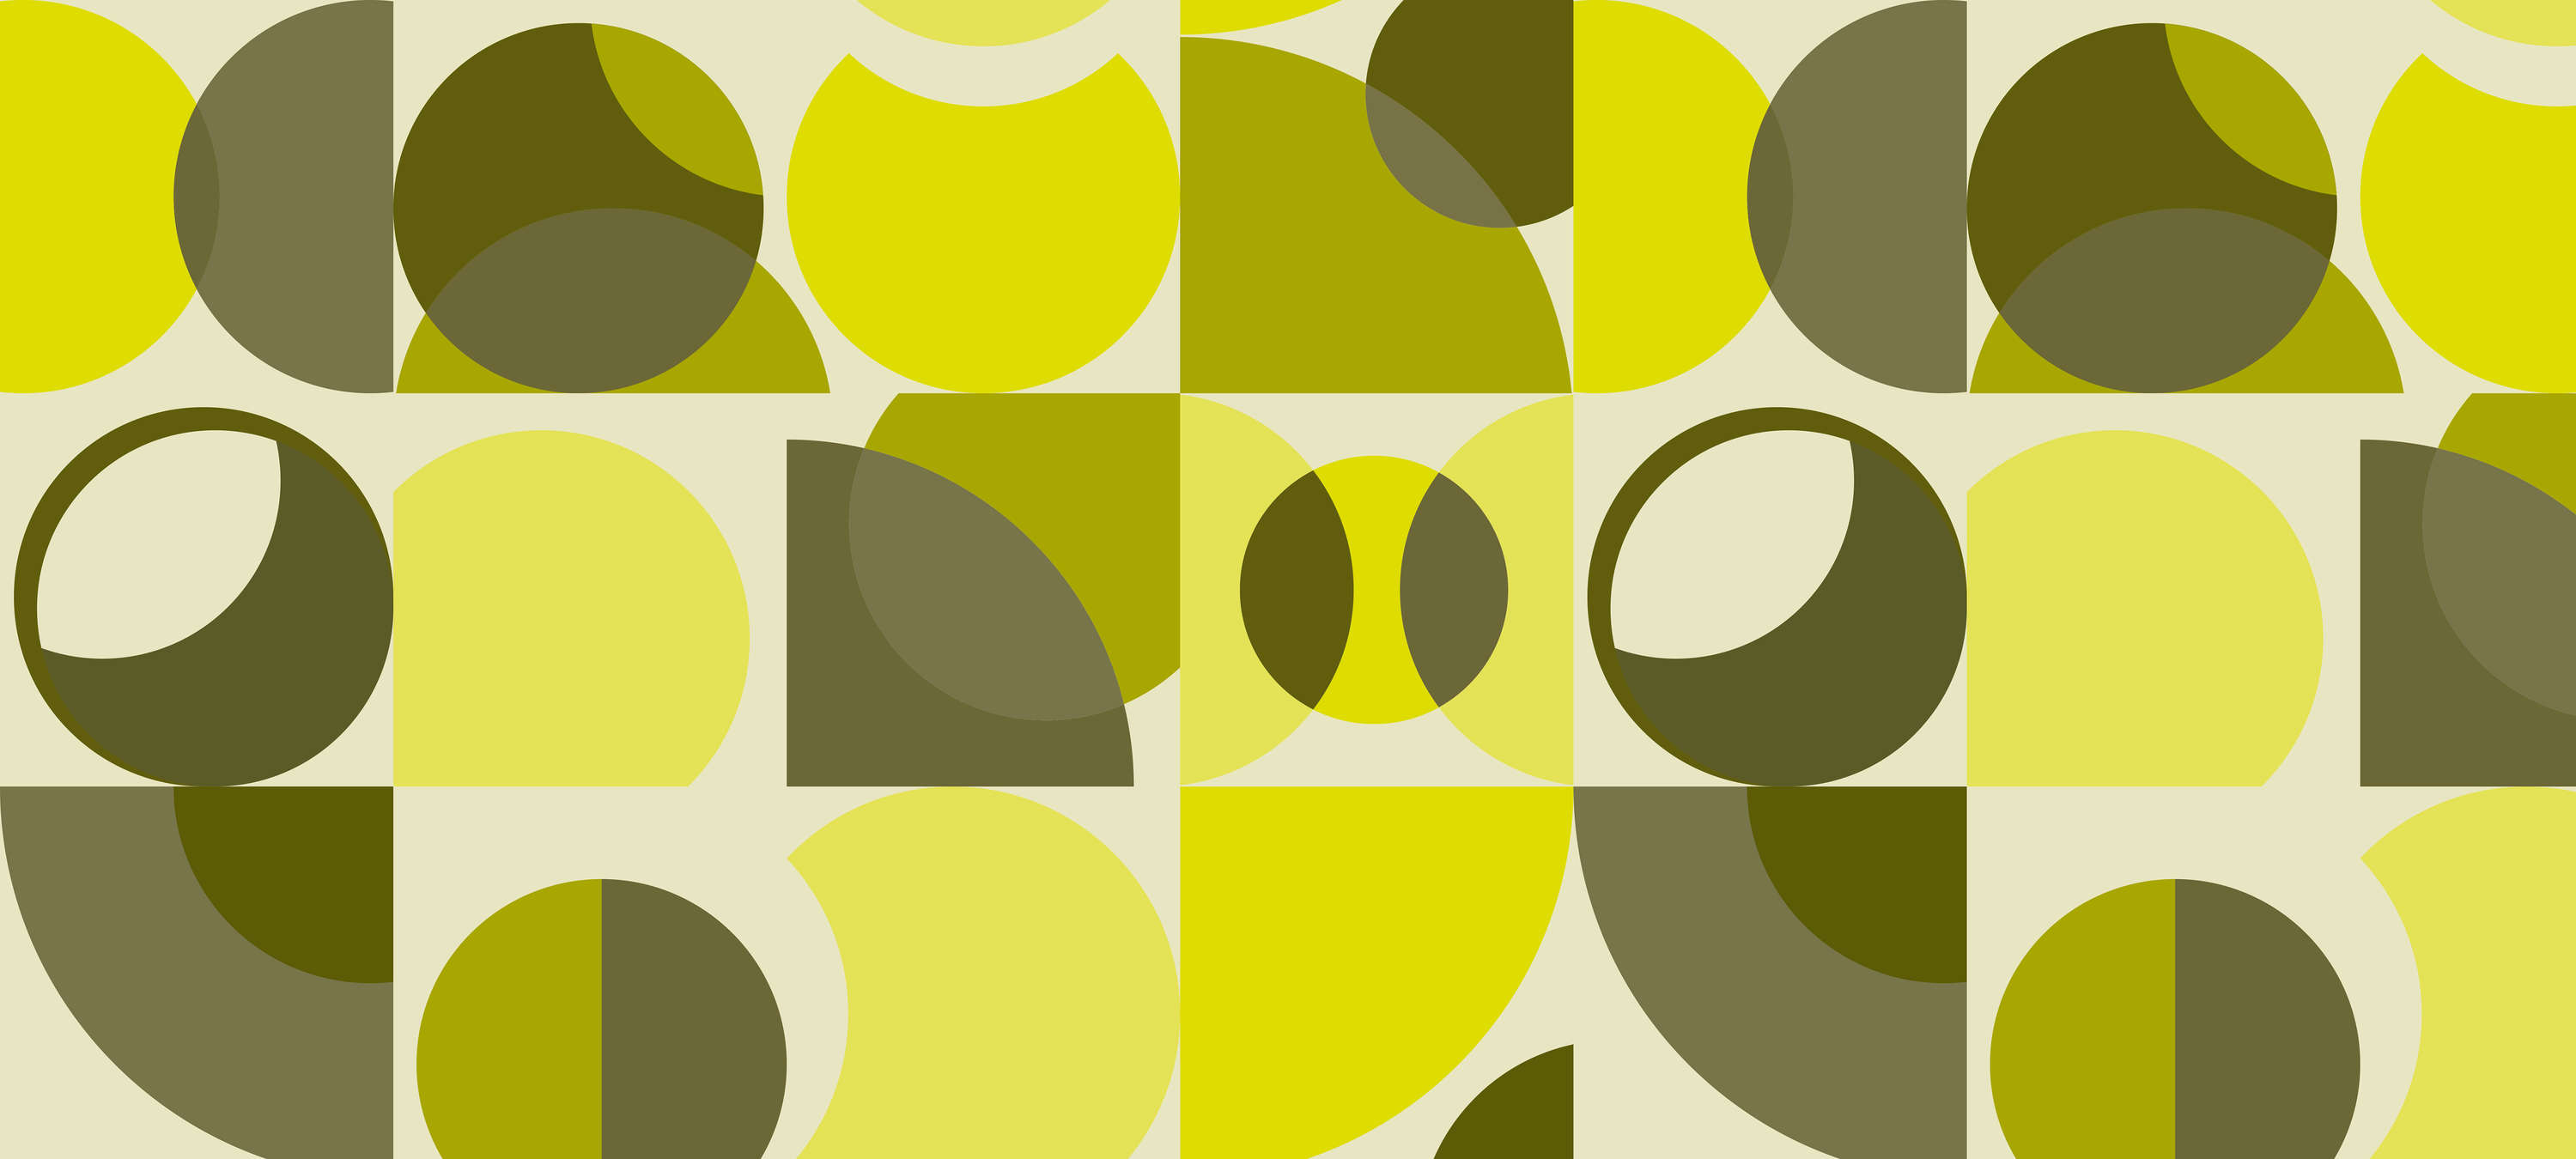             Retro mural with geometric design - yellow, green, grey
        